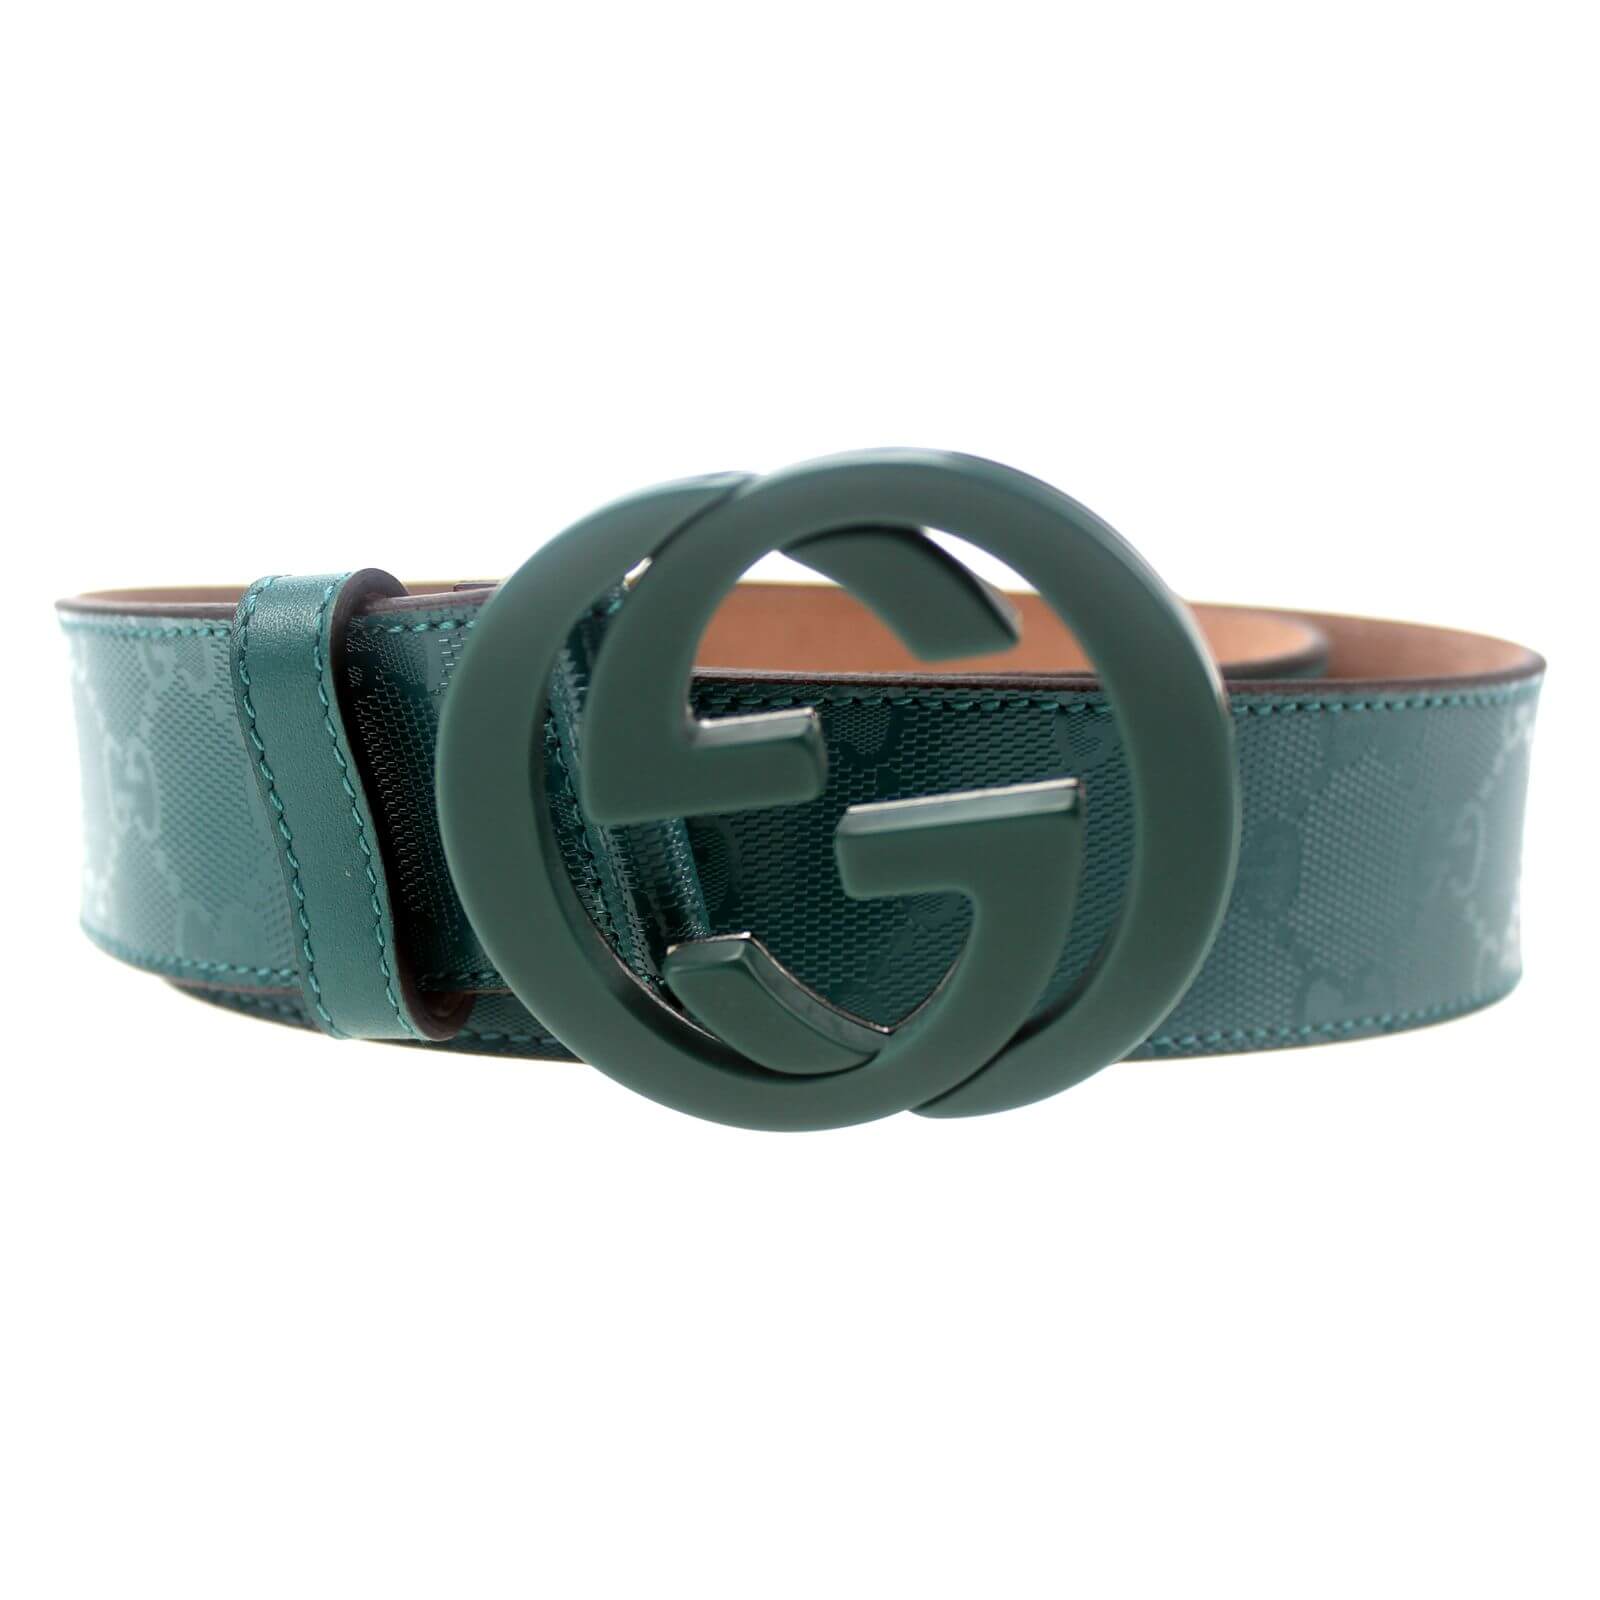 Gucci Teal Guccissima Leather Interlocking G Buckle Belt 114876 4618 (